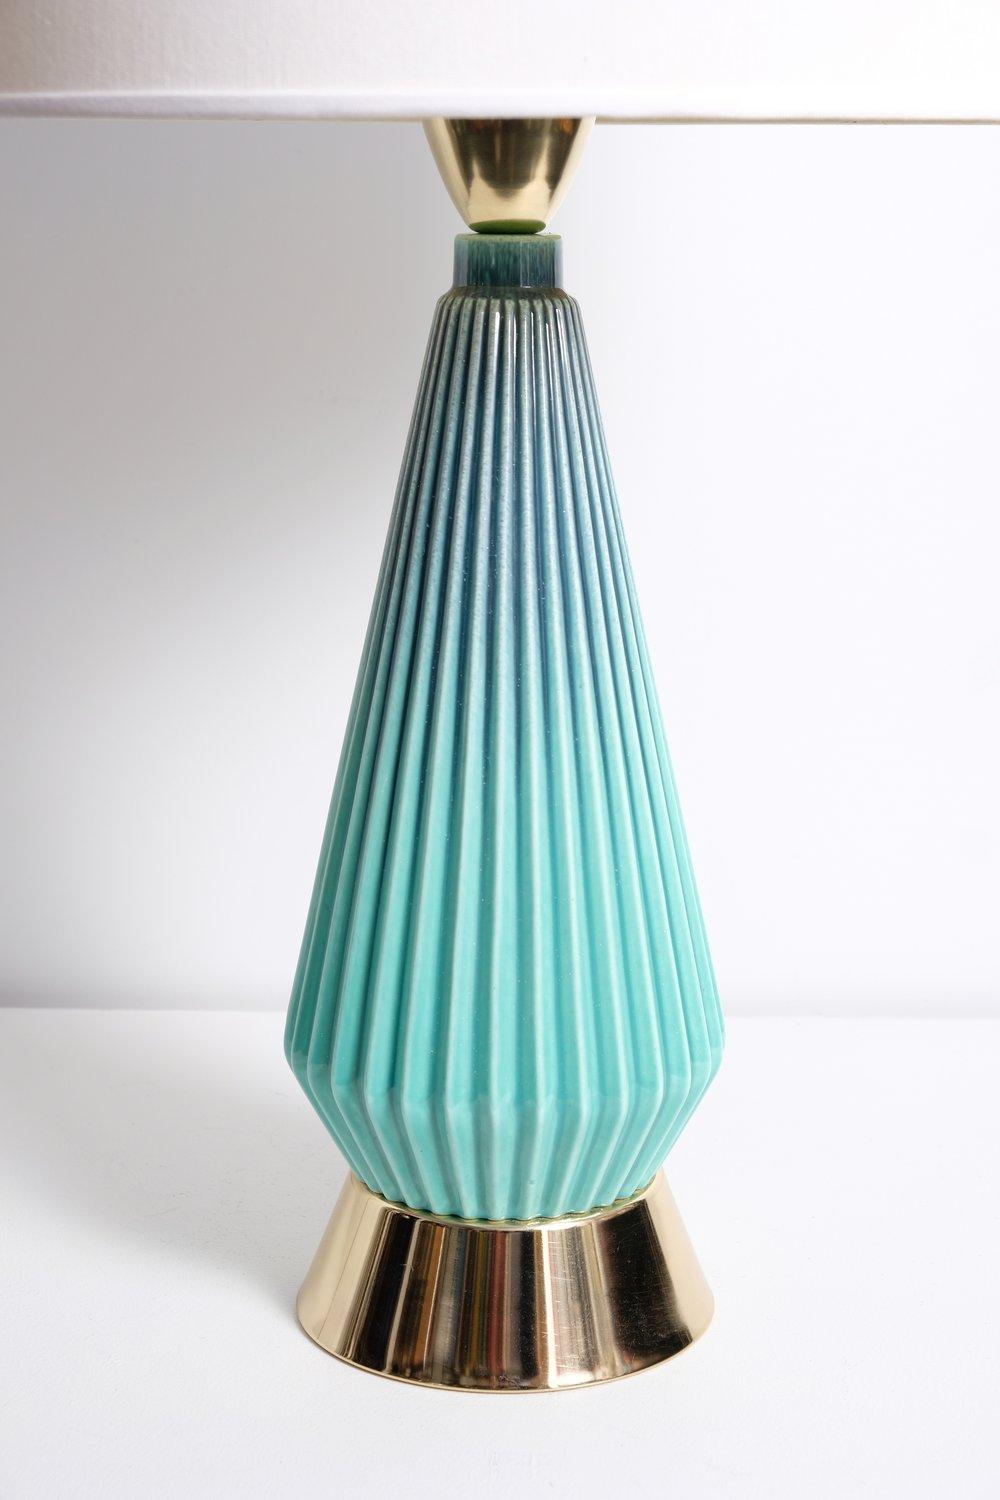 American Midcentury Ceramic Lamp For Sale